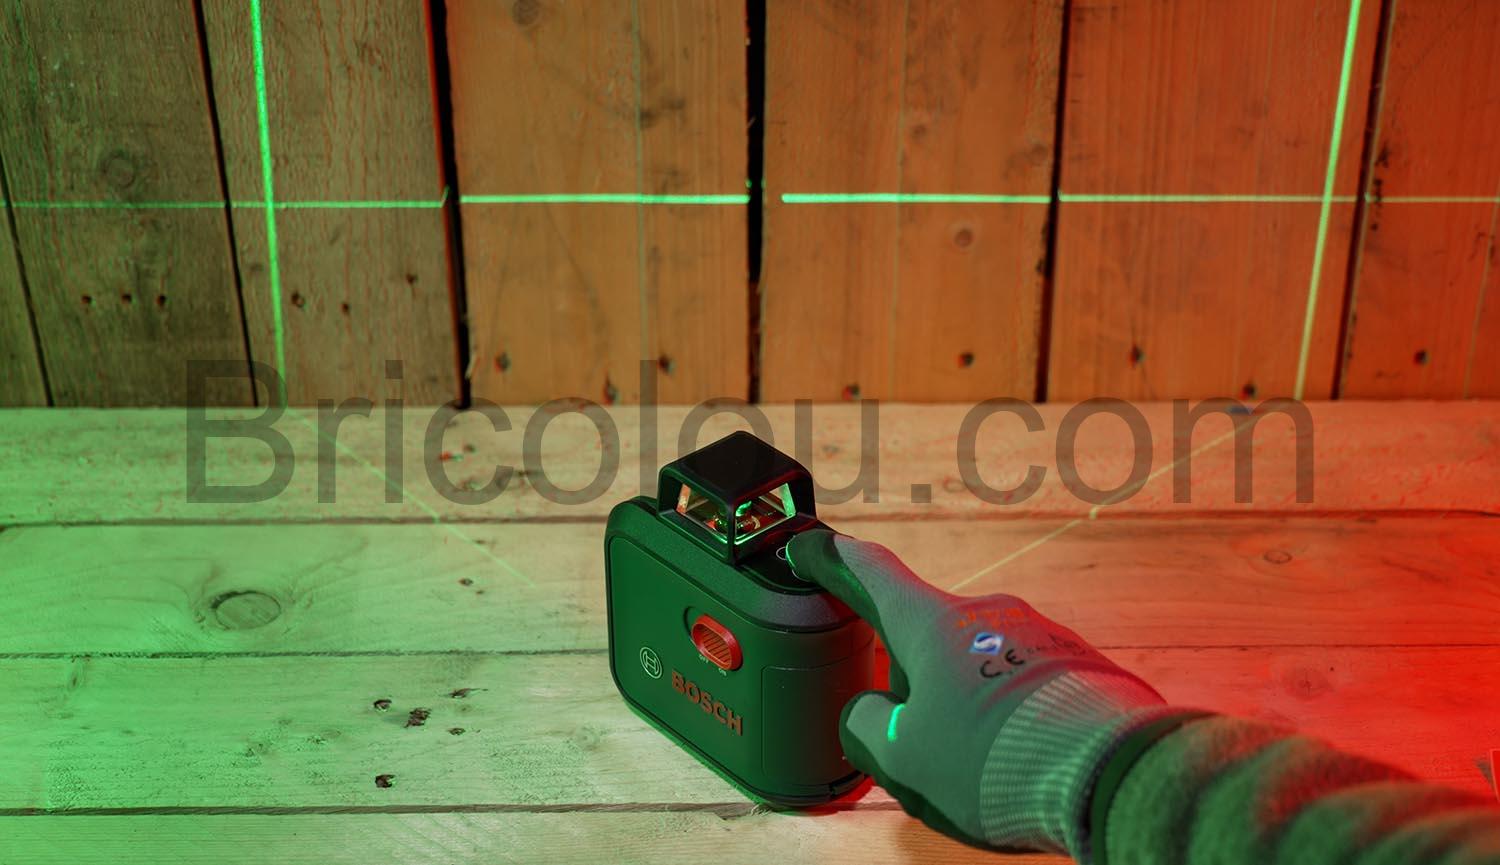 AdvancedLevel 360 Bosch Niveau Laser ligne vert